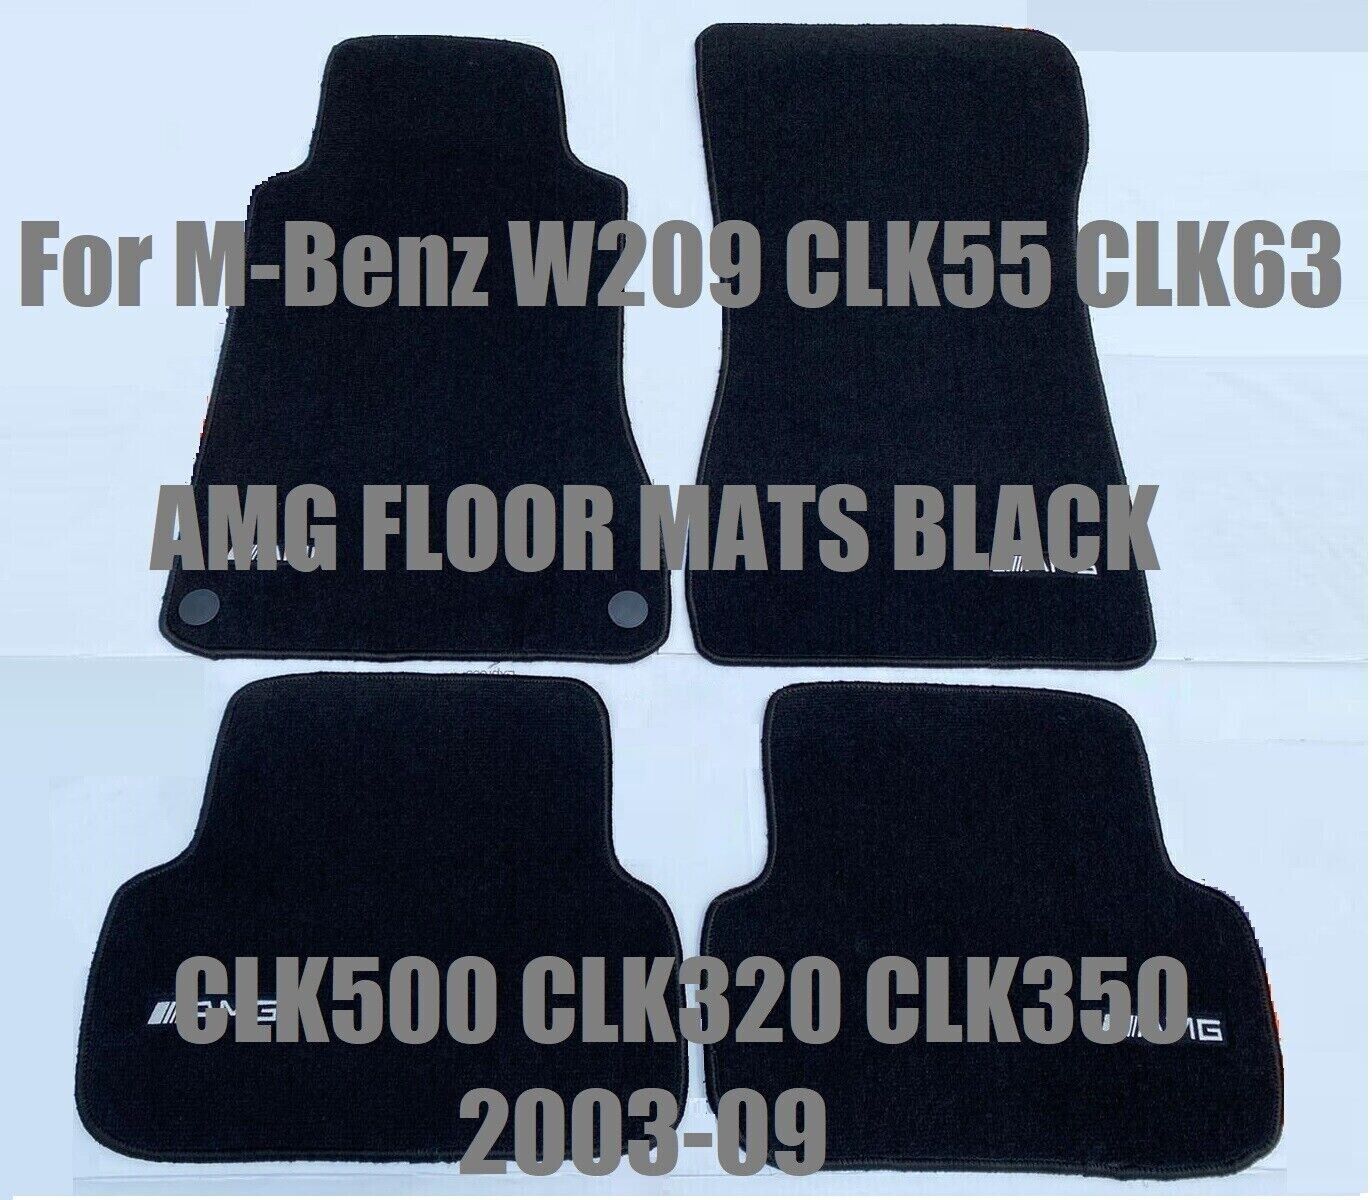 For M-Benz W209 CLK55 CLK63 AMG FLOOR MATS BLACK CLK500 CLK320 CLK350 2003-09